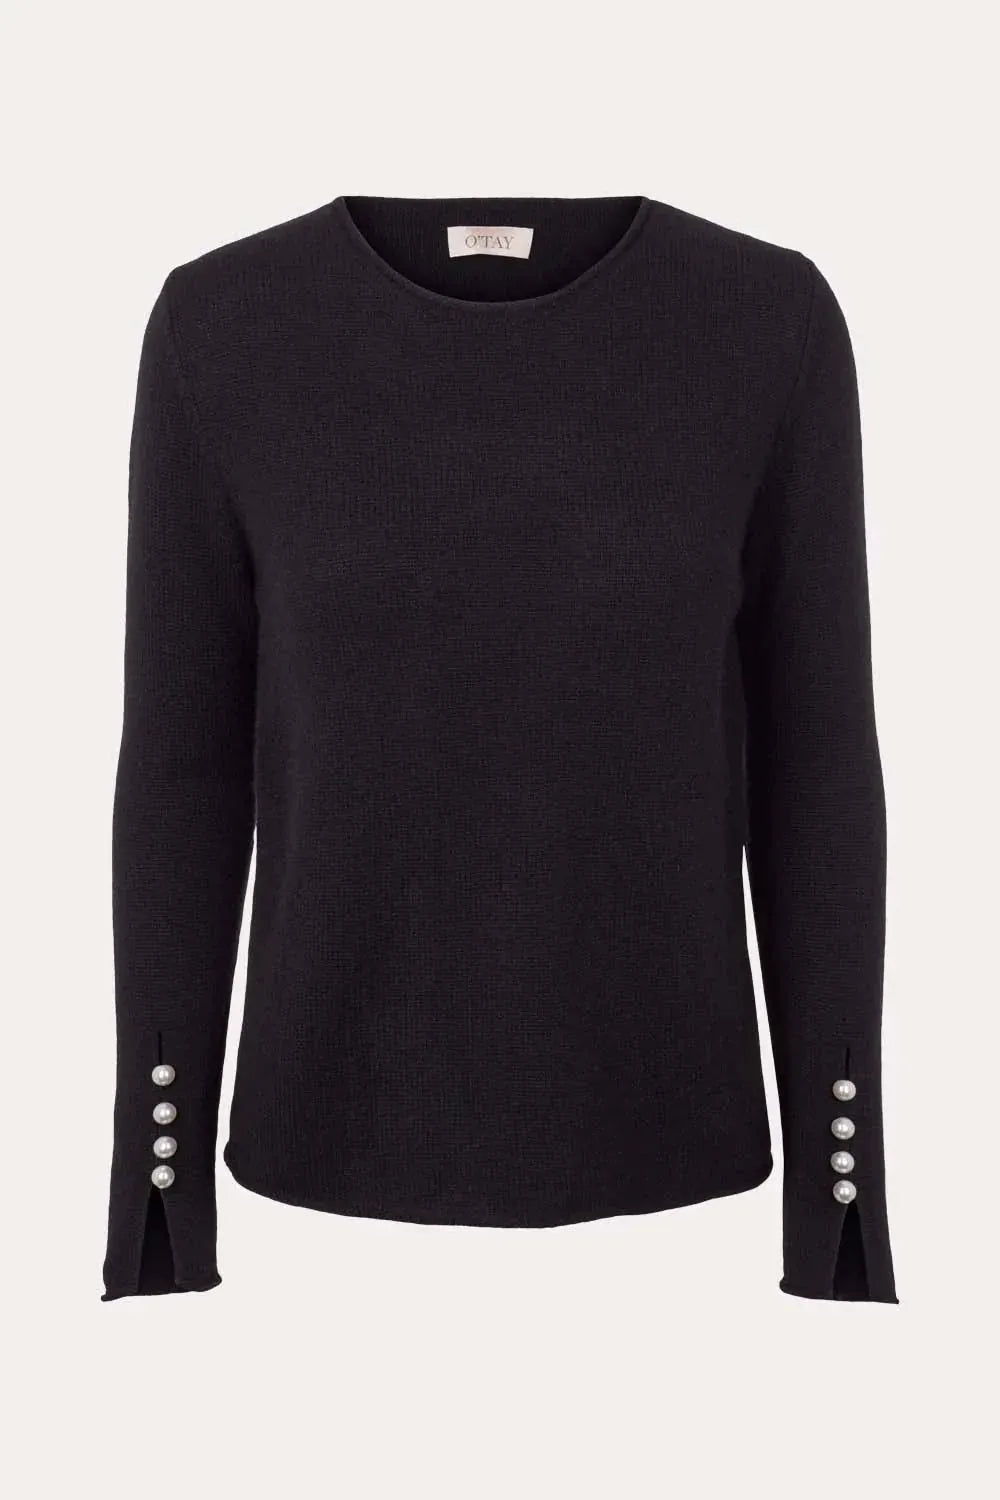 O'TAY Abbelone Sweater i 100% cashmere, black